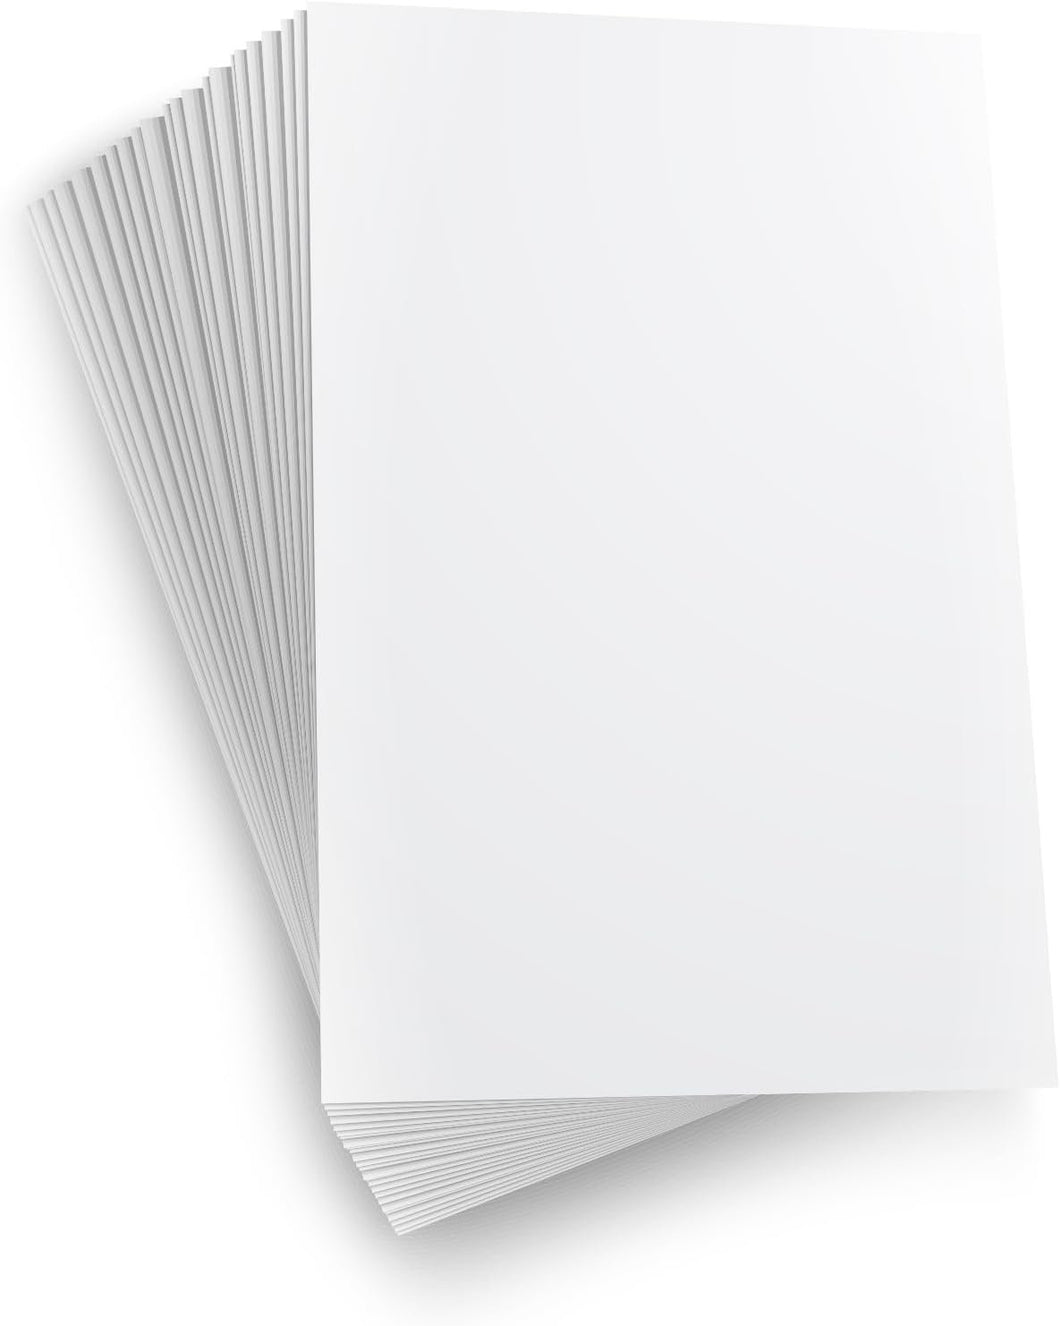 White Cardstock Printer Paper By Hamilco (50-Pack)- 8.5 x 11